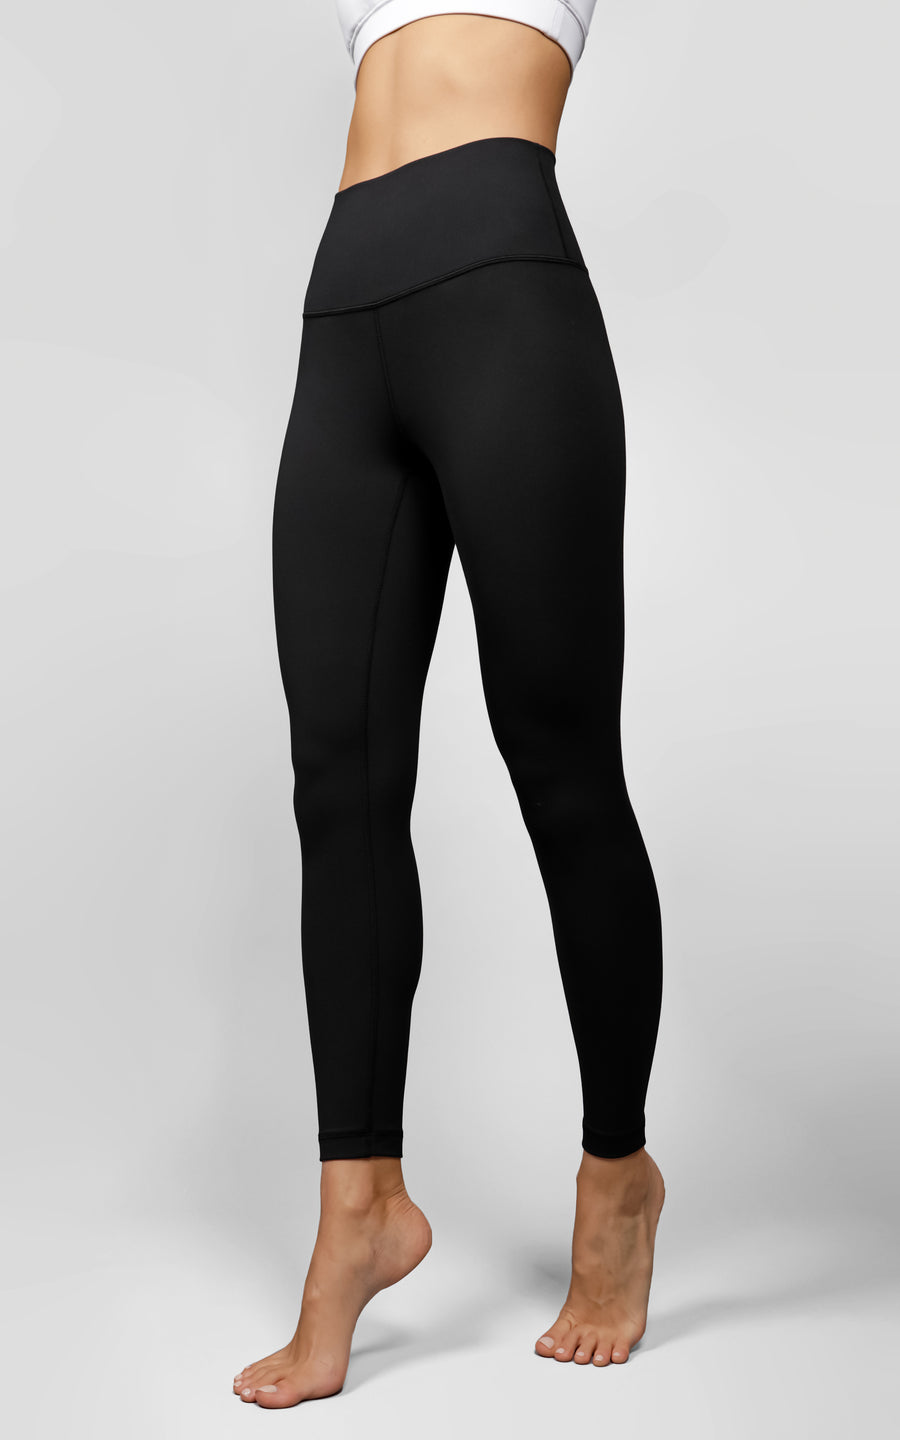 Yogalicious Lux Plus Size 9 inseam Side Pocket Shorts Prepack